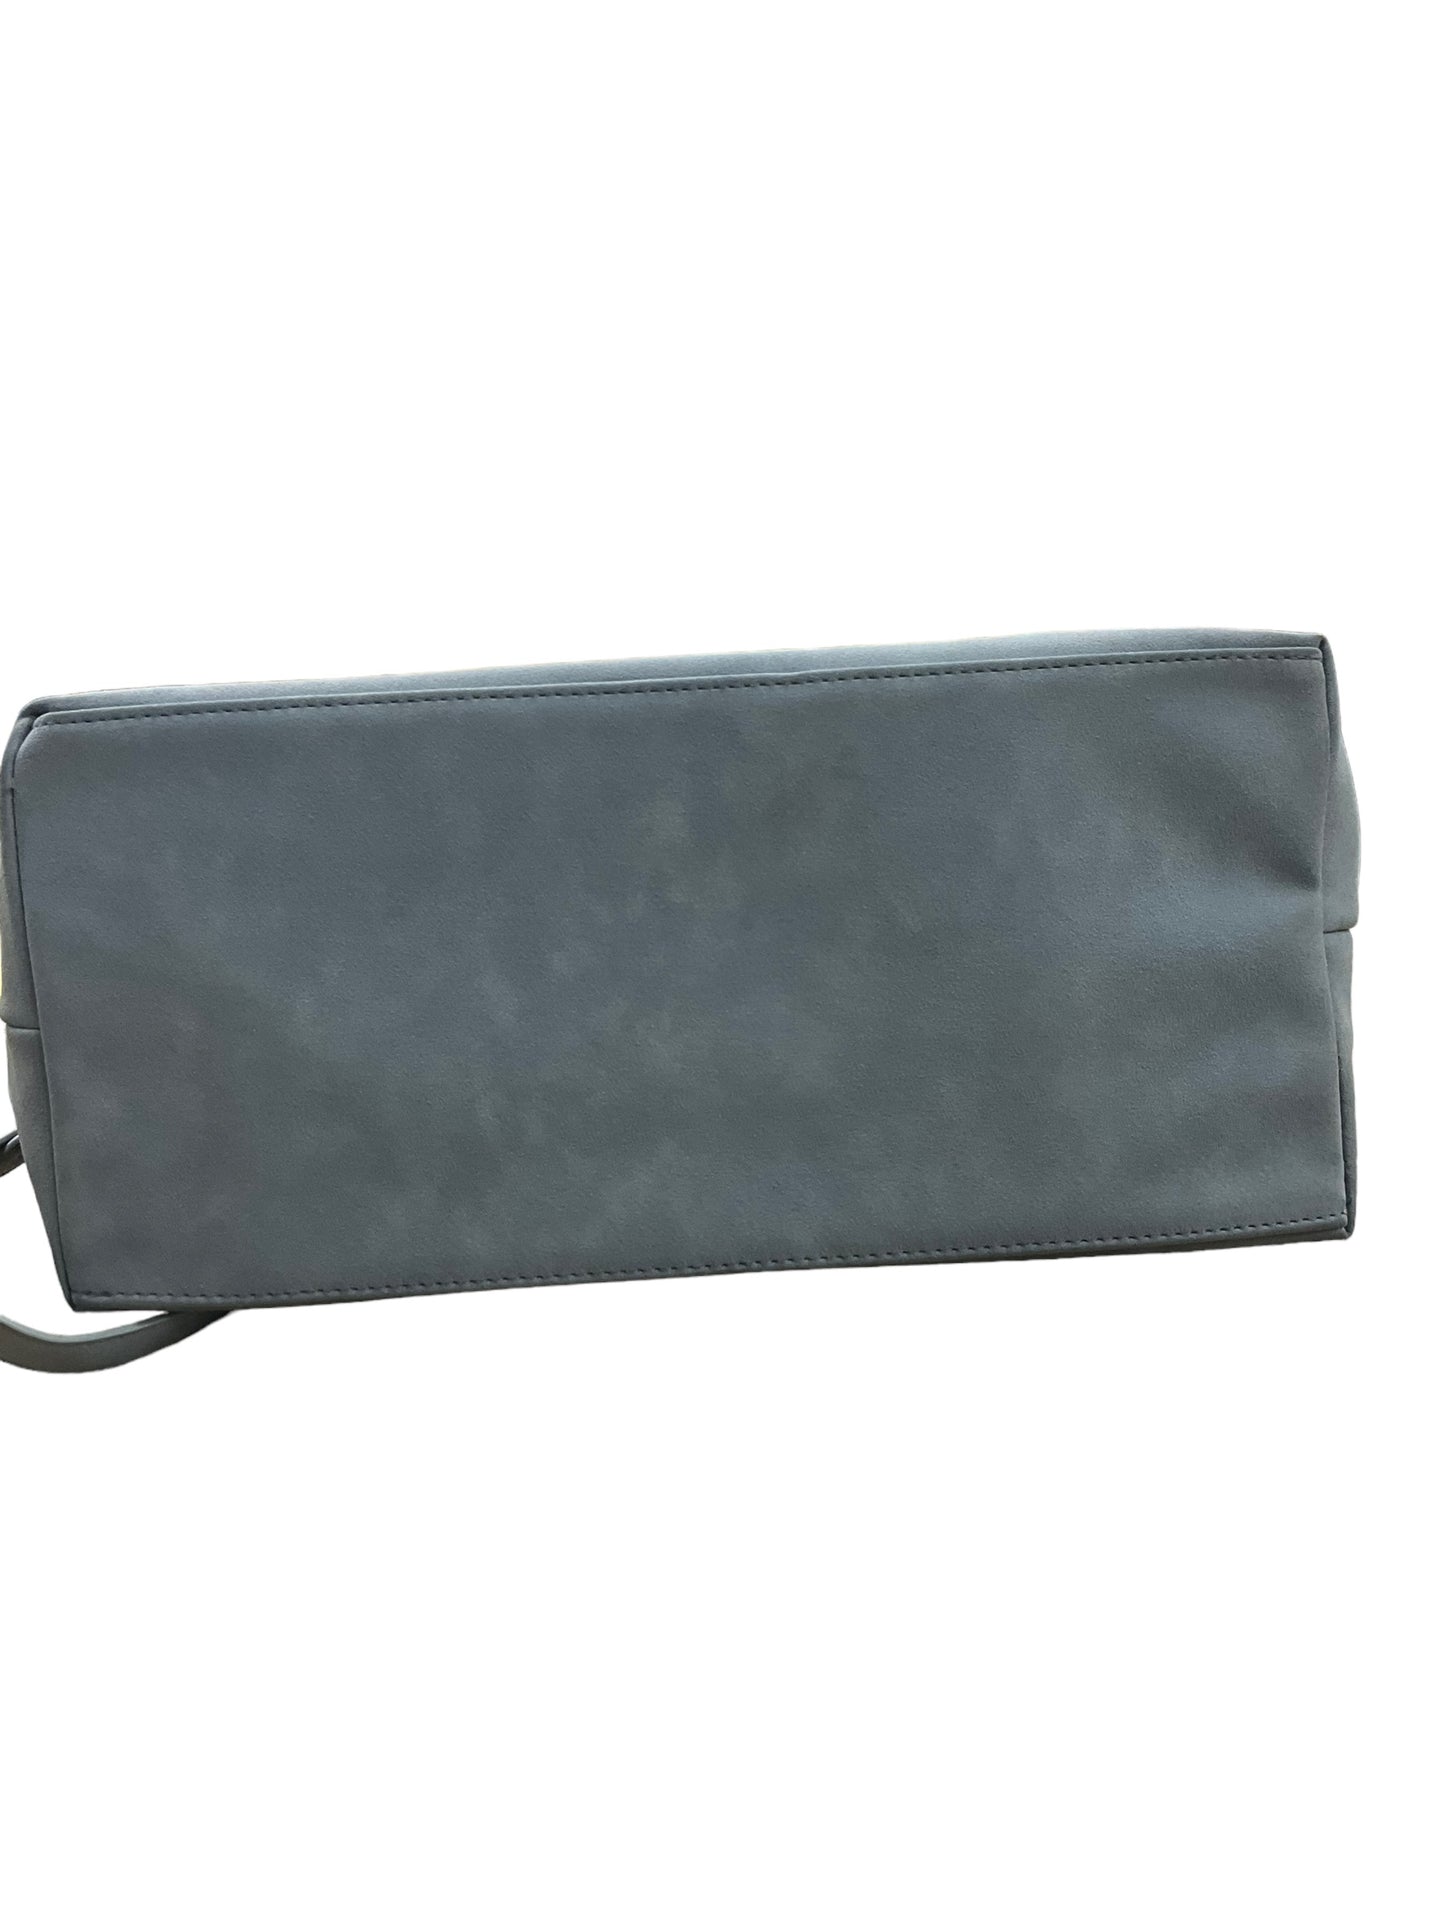 Handbag By Universal Thread  Size: Large